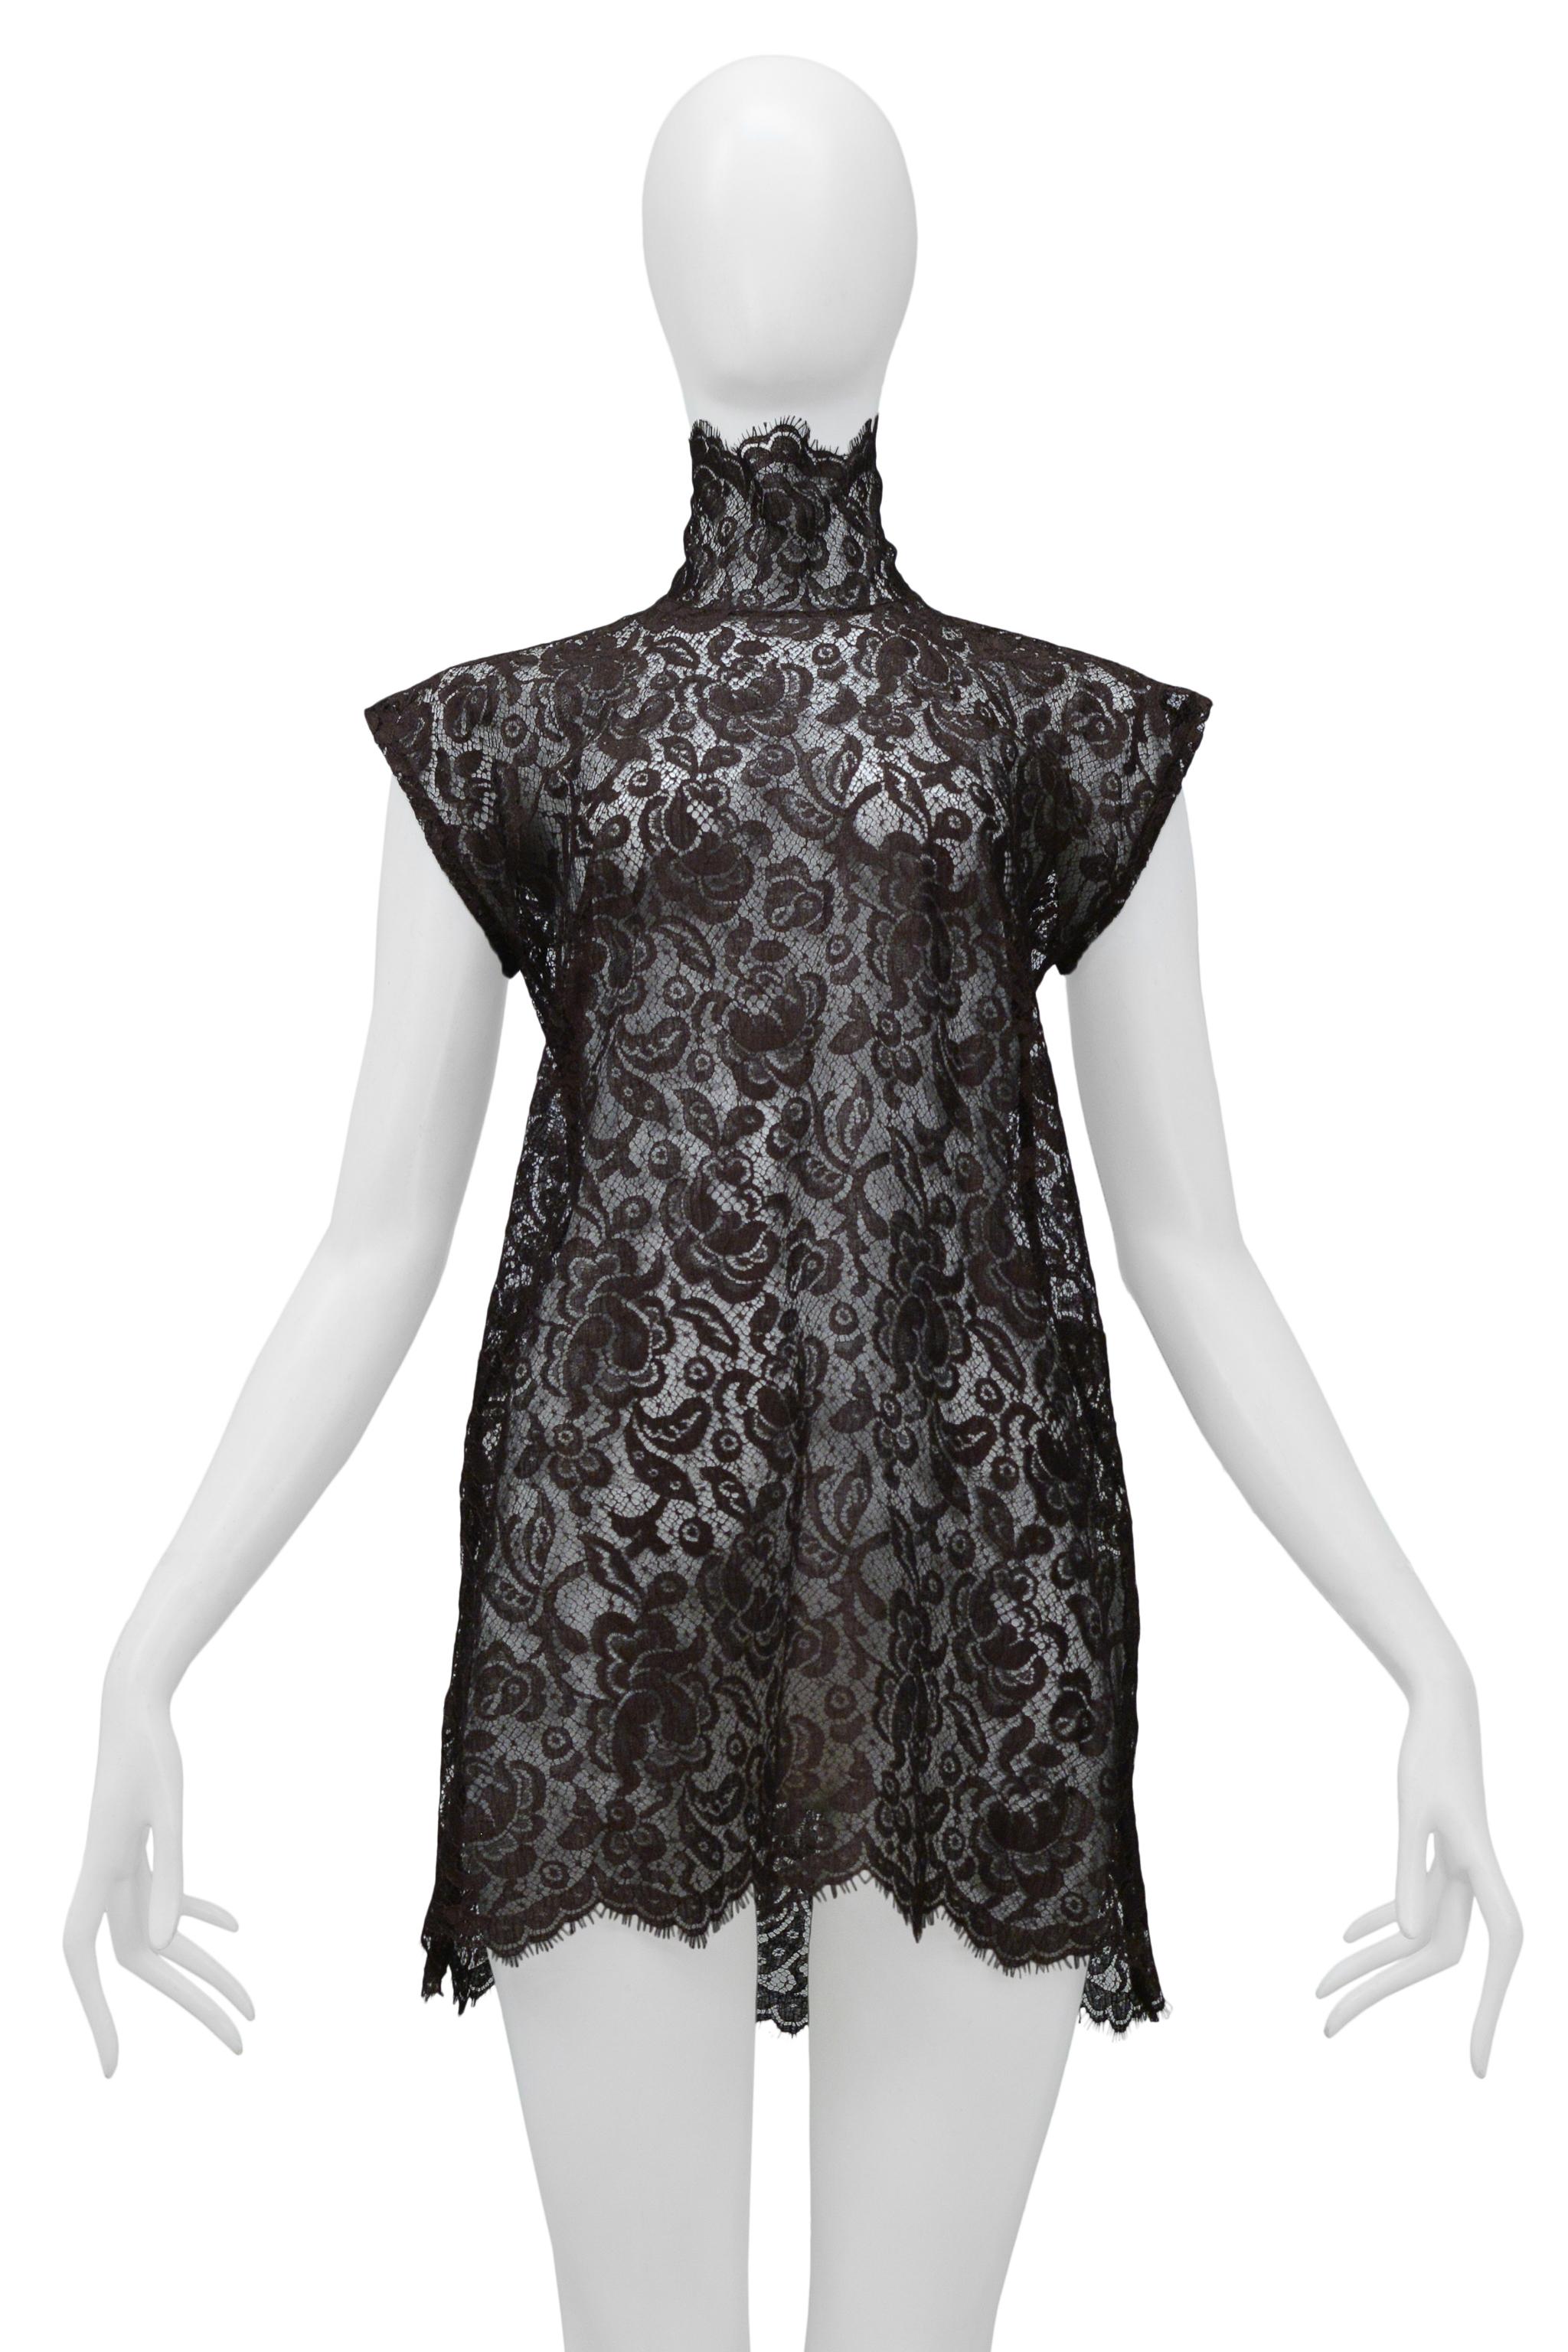 Black Dolce & Gabbana Brown Lace Mini Dress with High Neck 2001 